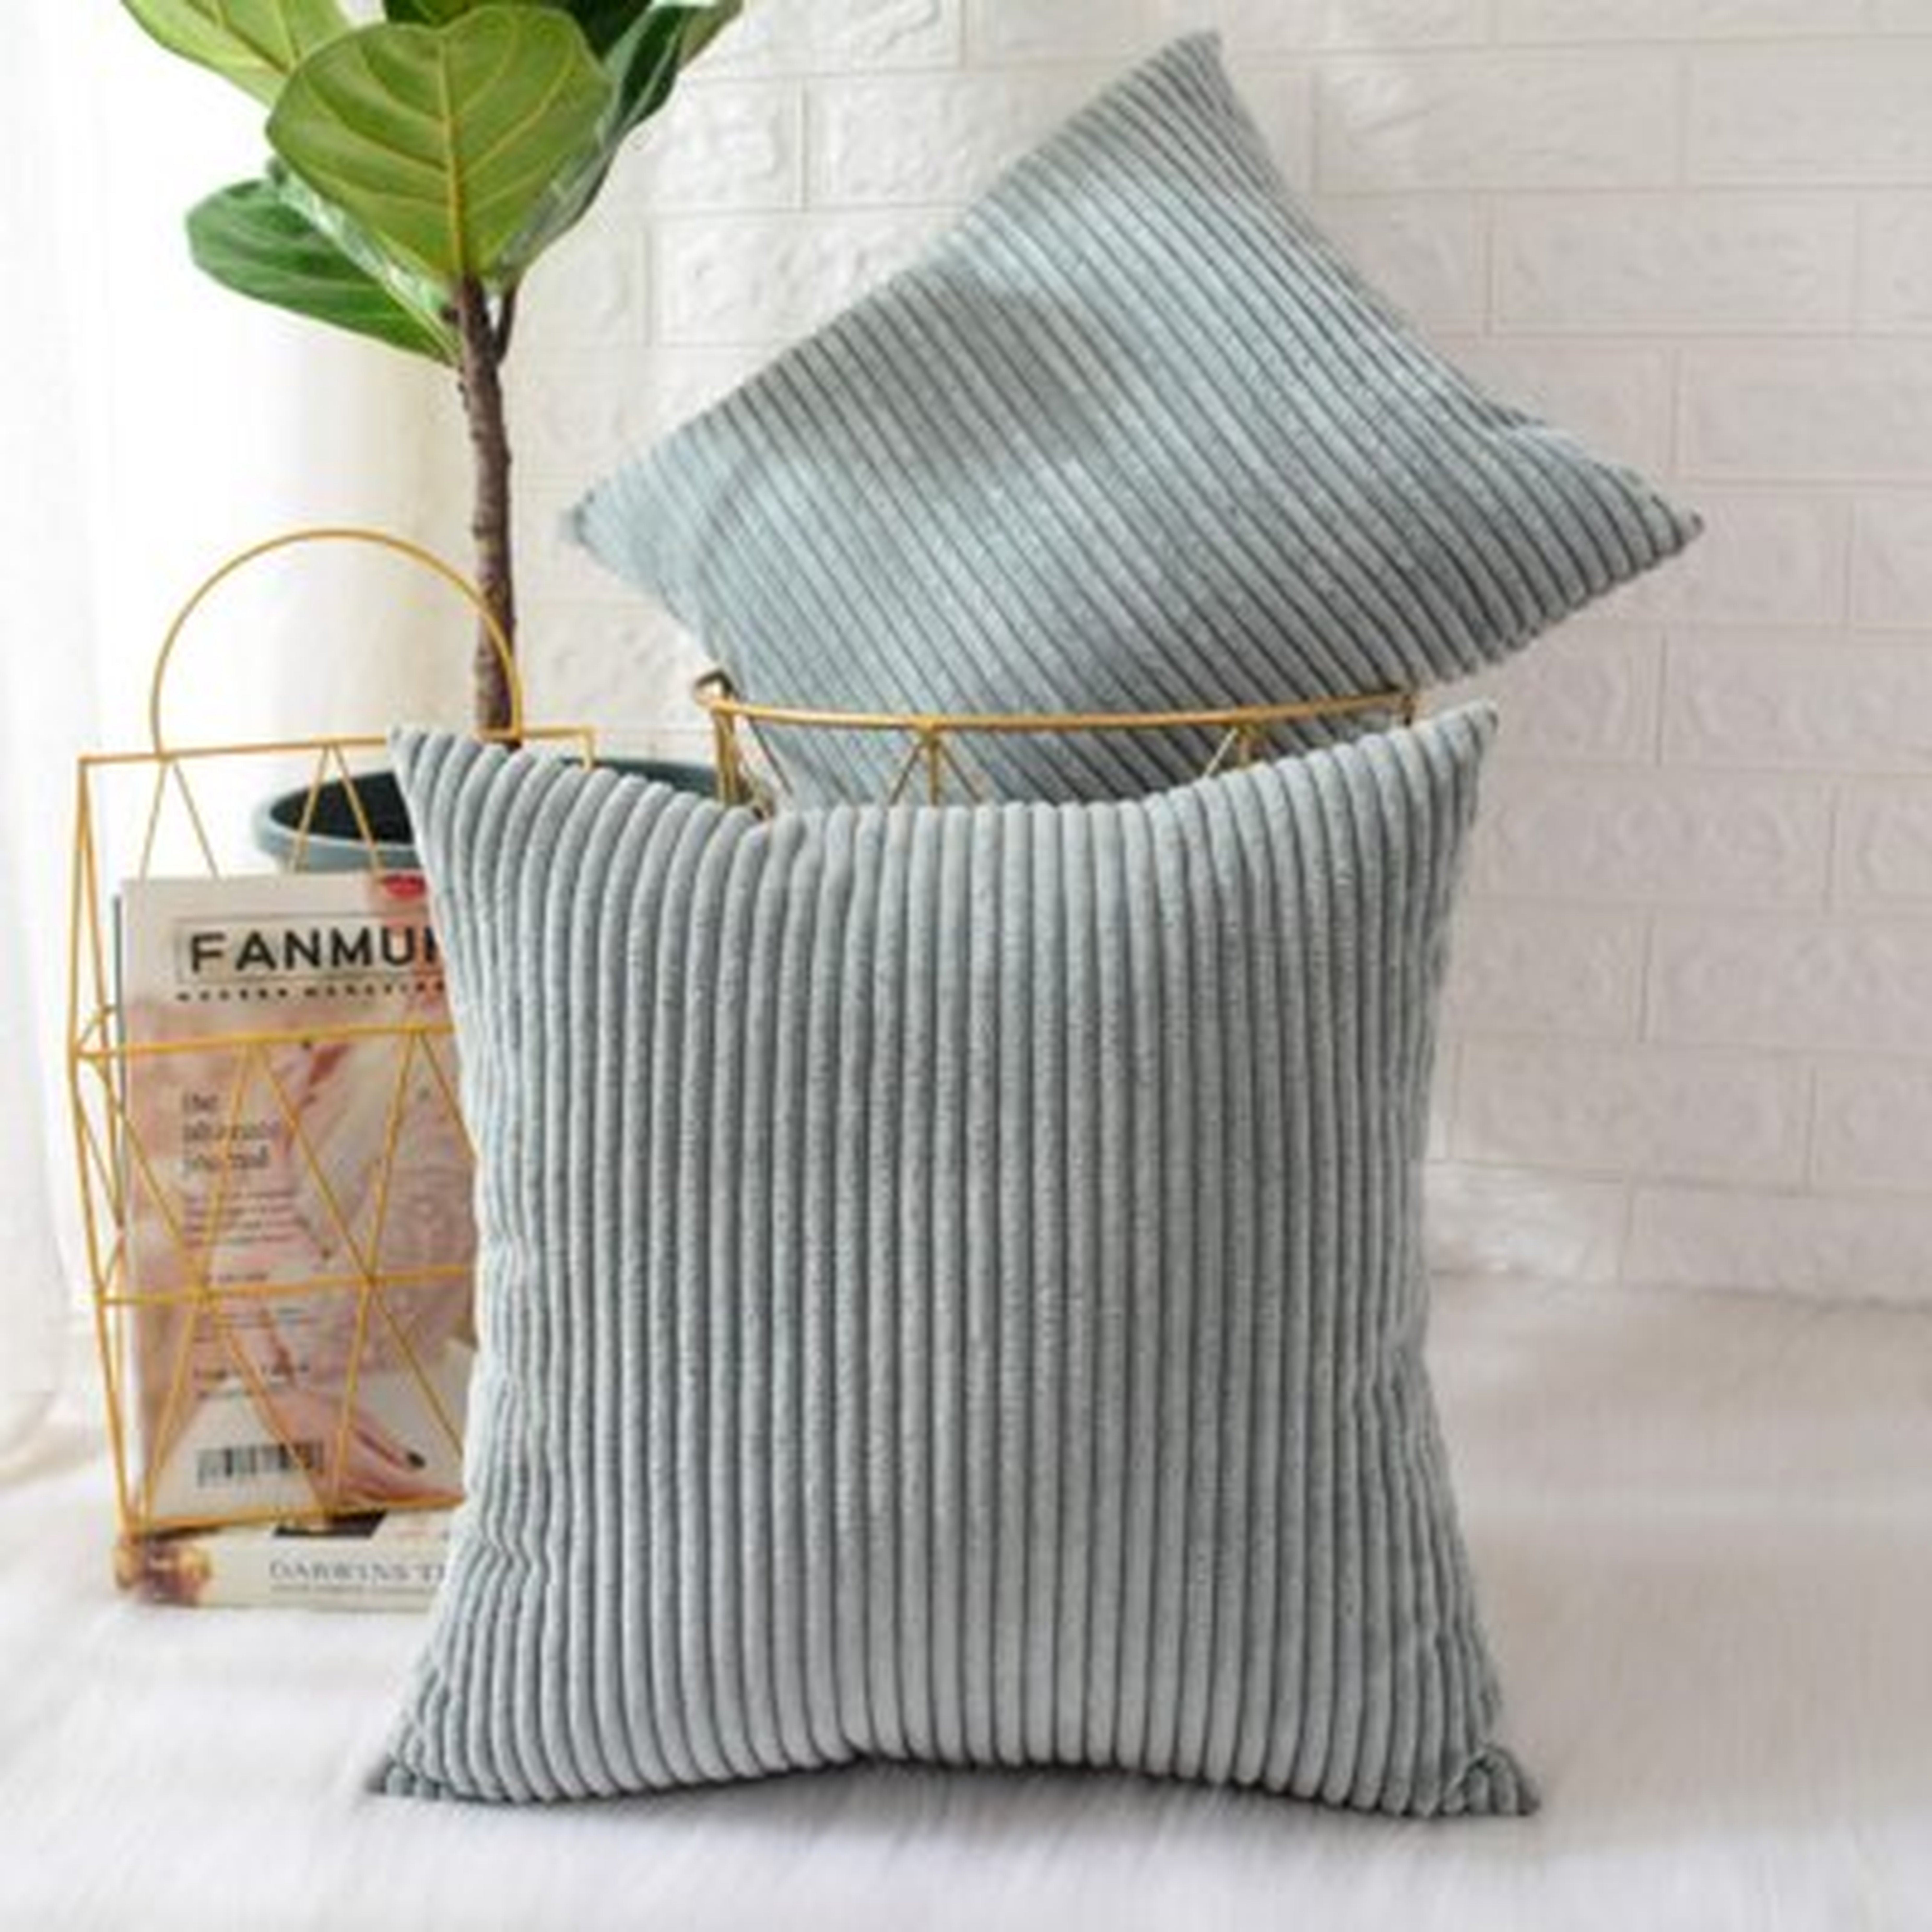 Ayedin Square Throw Pillow Cover (Set of 2) - GRAY BLUE - Wayfair